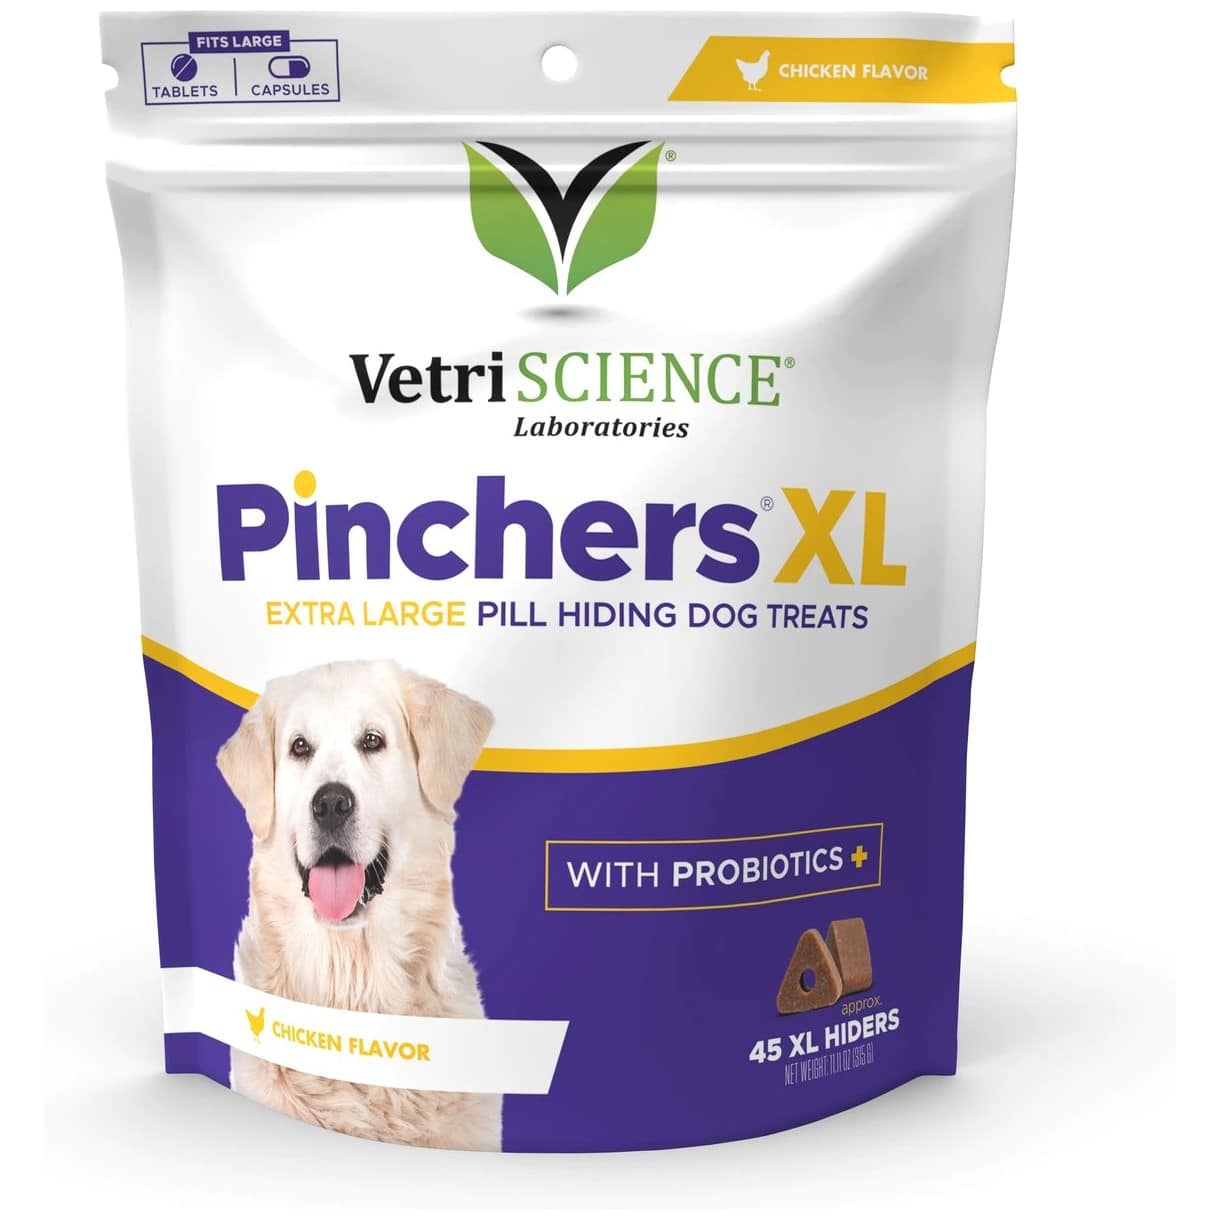 VetriScience Pinchers Pill Hiding Probiotic Chicken Flavor Dog Treats, X-Large